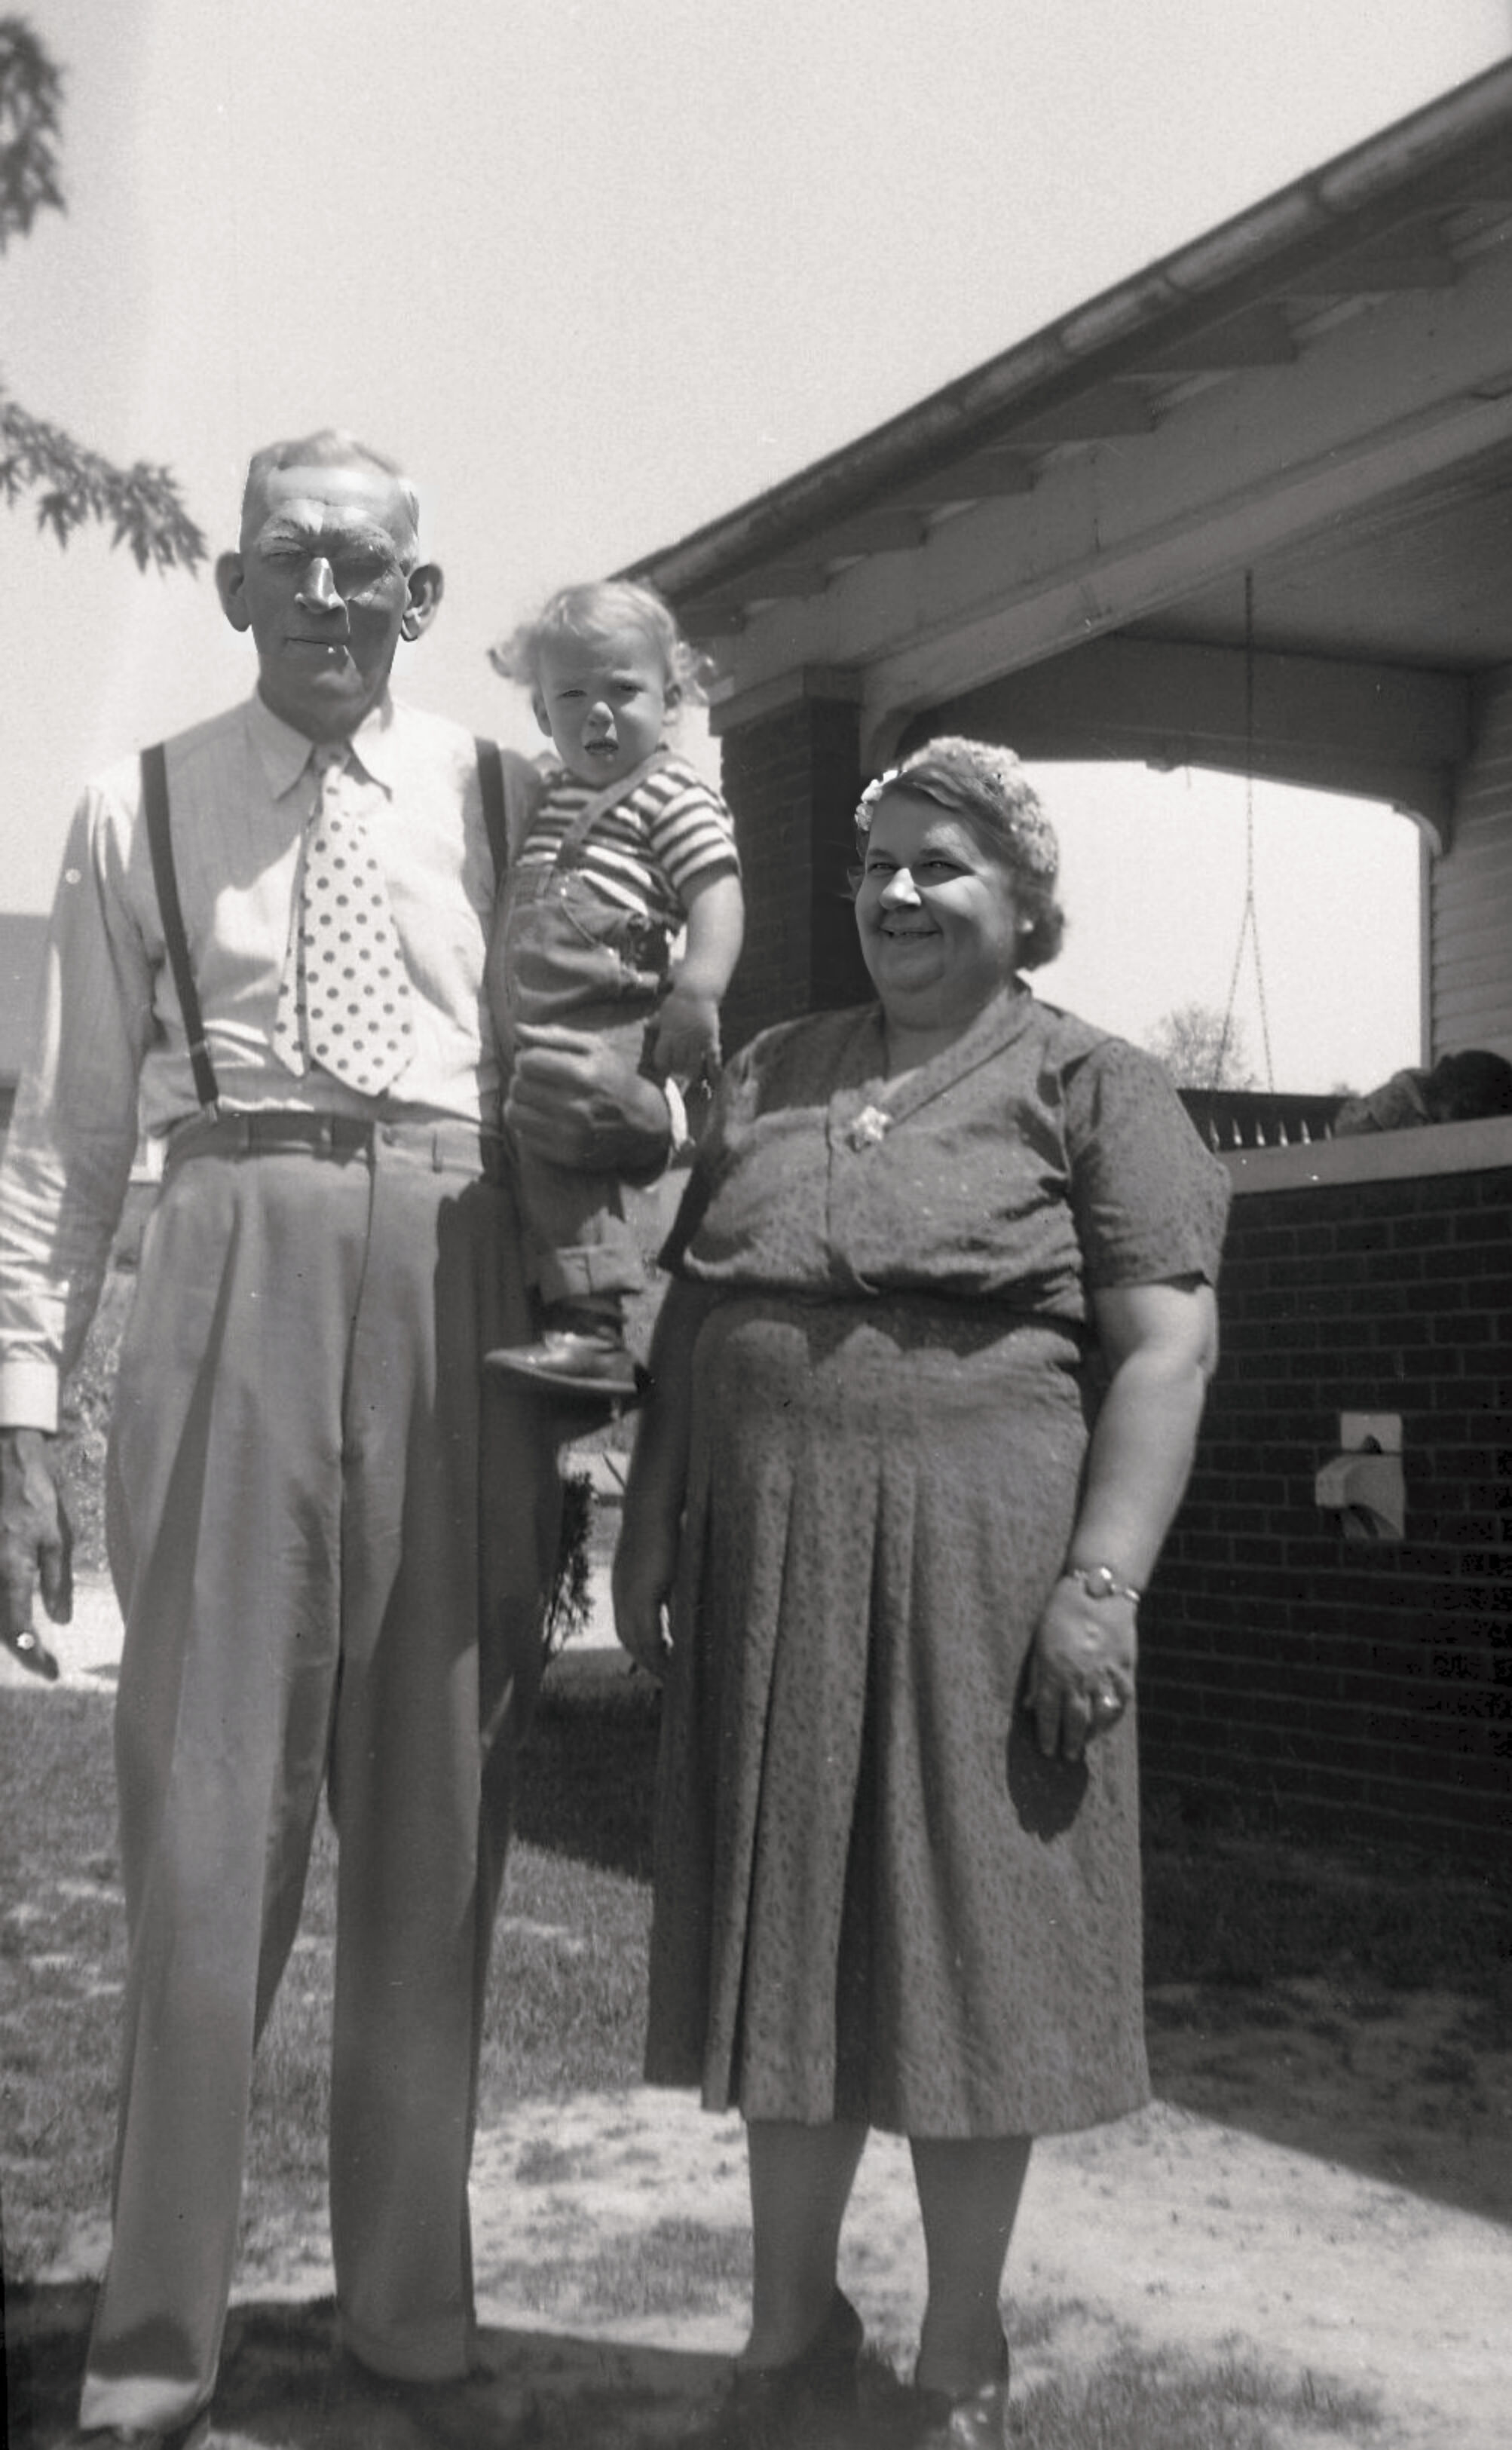 Joseph & Amelia with son Greg
1952